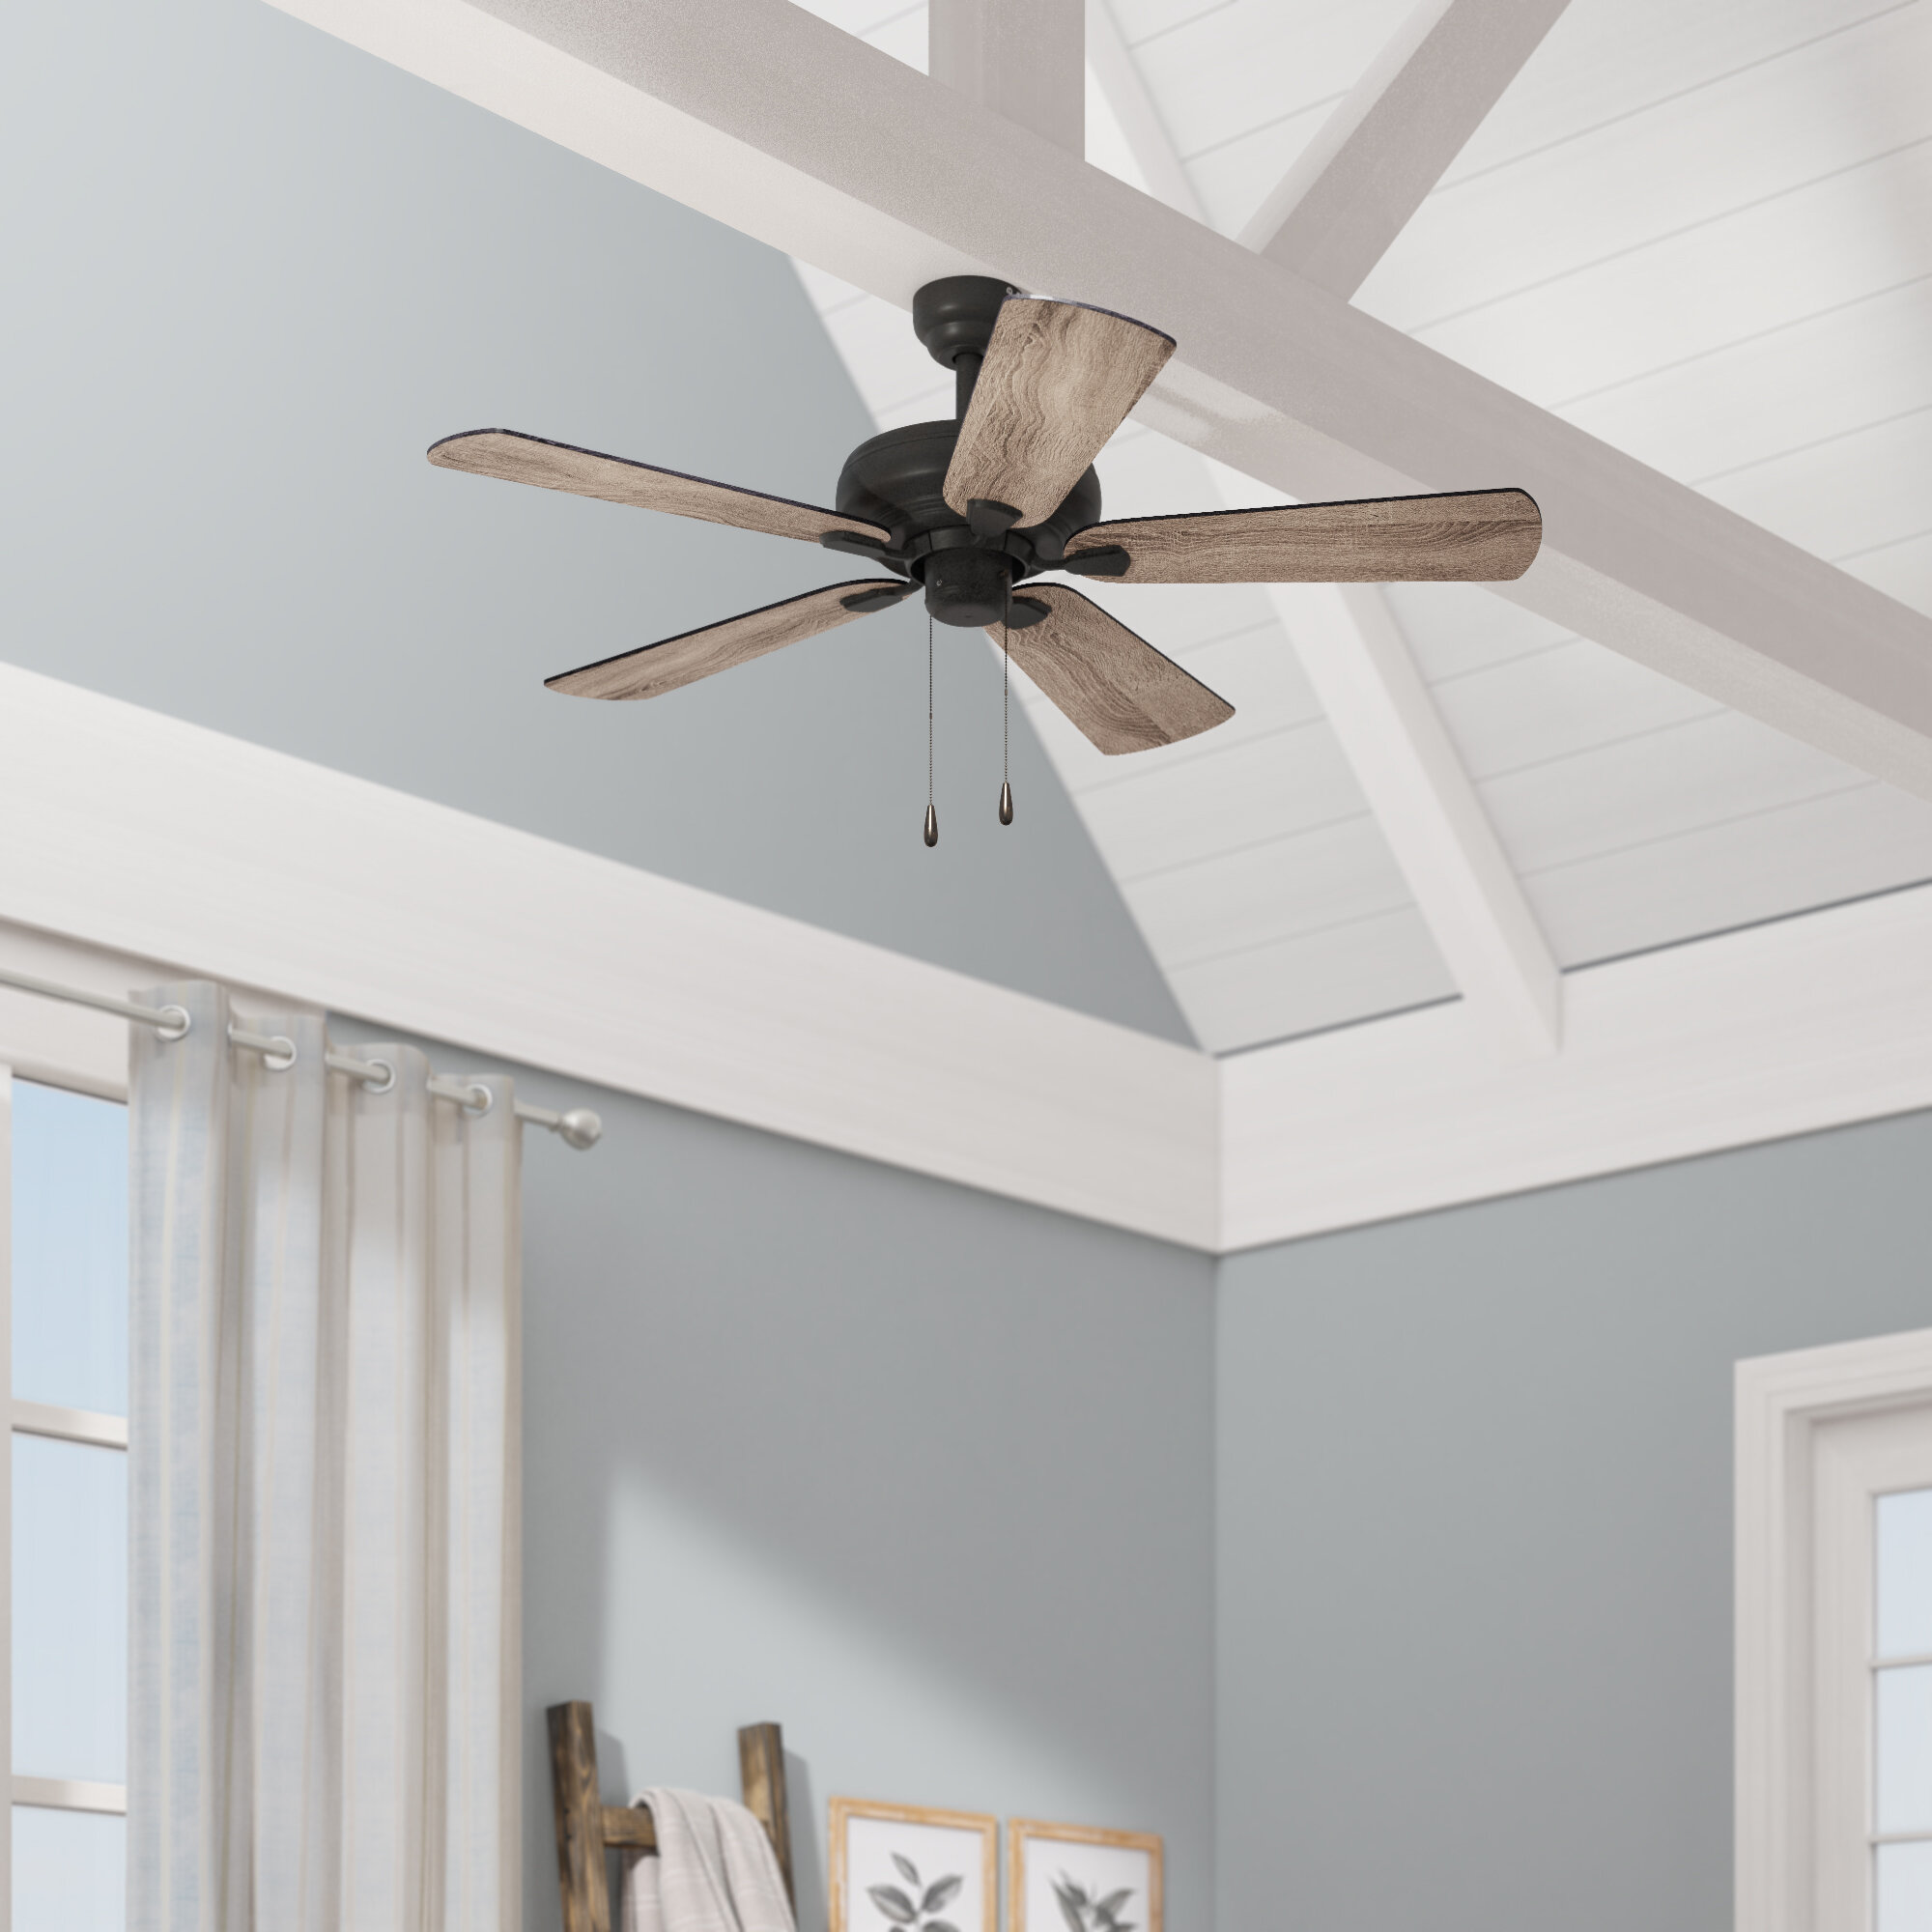 Details about   Ceiling Fan 60 in Large LED Light Farmhouse Reversible Blade Matte Black Gray 